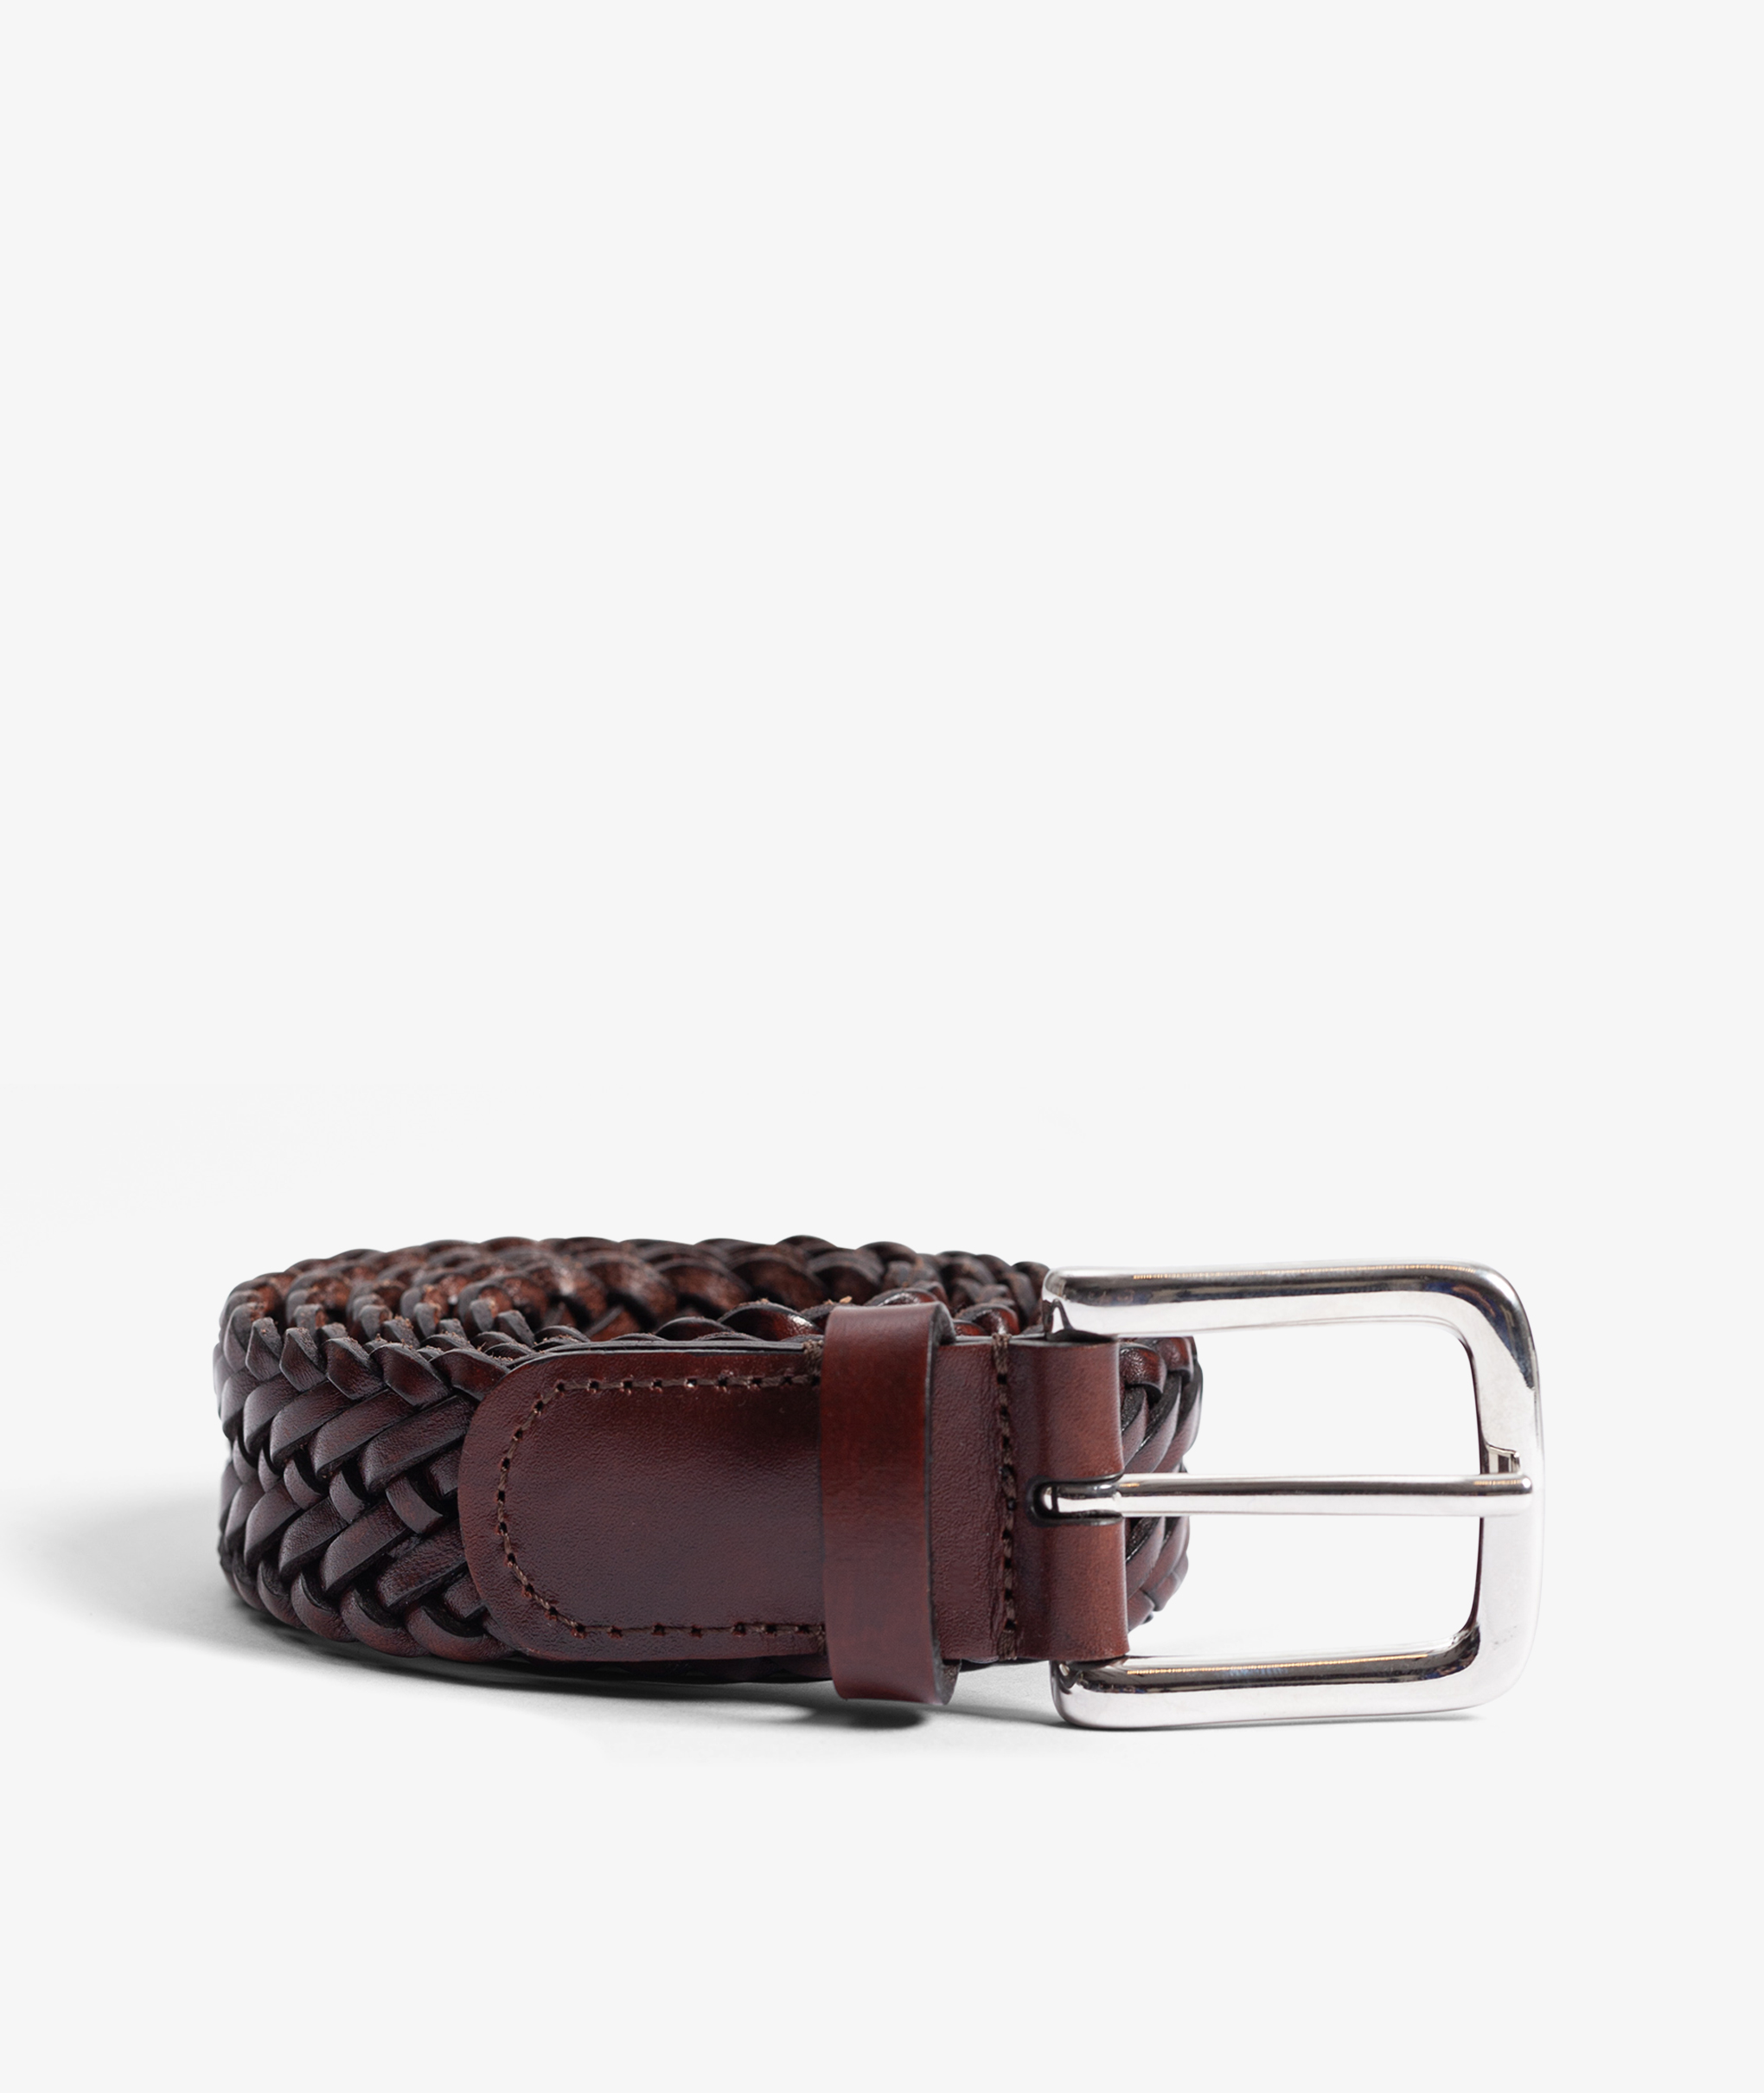 https://www.norsestore.com/shared/167/448/andersons-braided-leather-belt_u.jpg